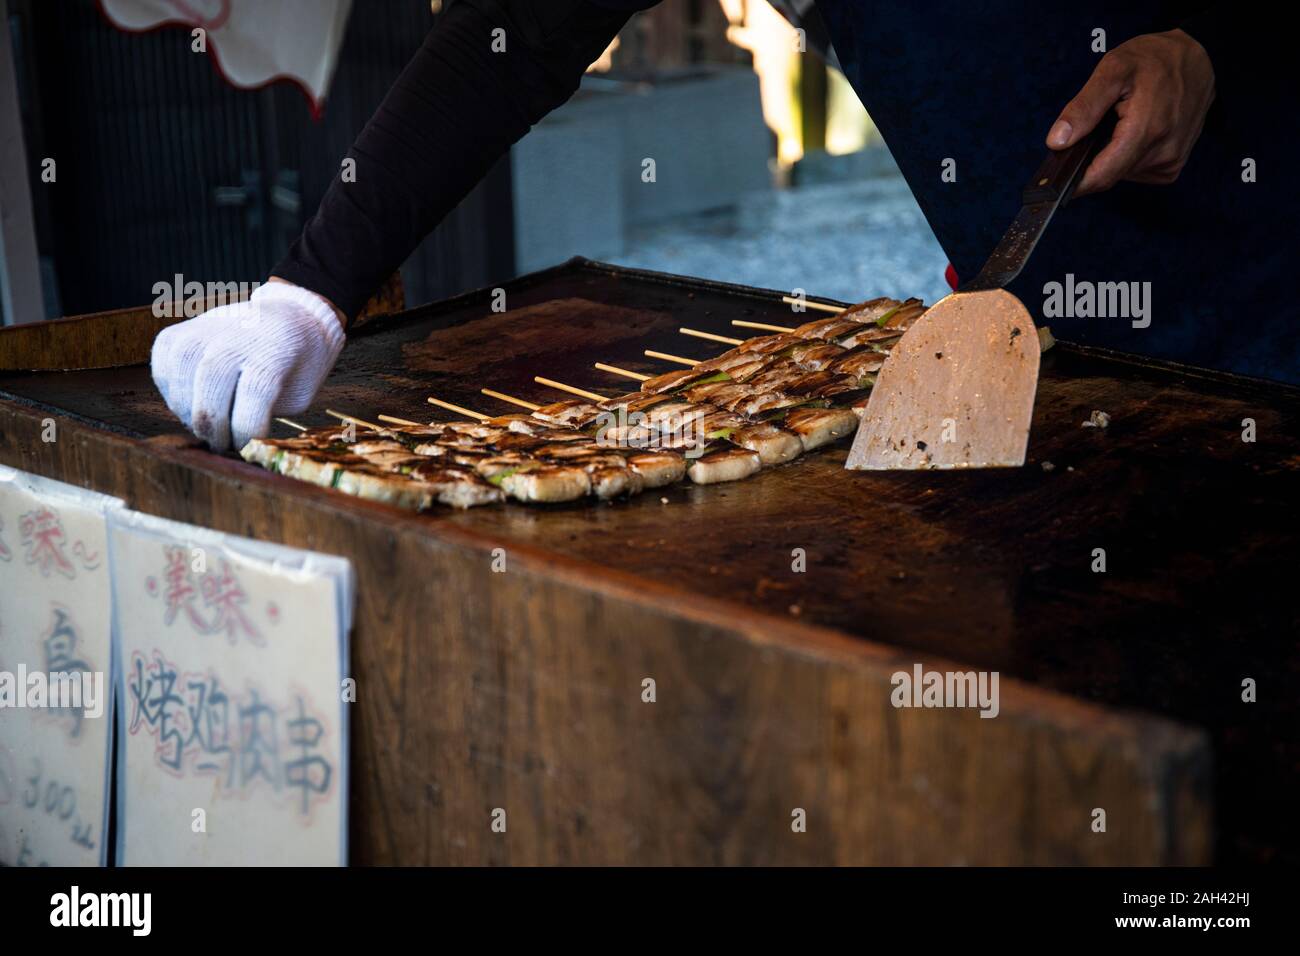 Japan, Kyoto Prefecture, Kyoto City, Hands of chef preparing yakitori at food stand Stock Photo